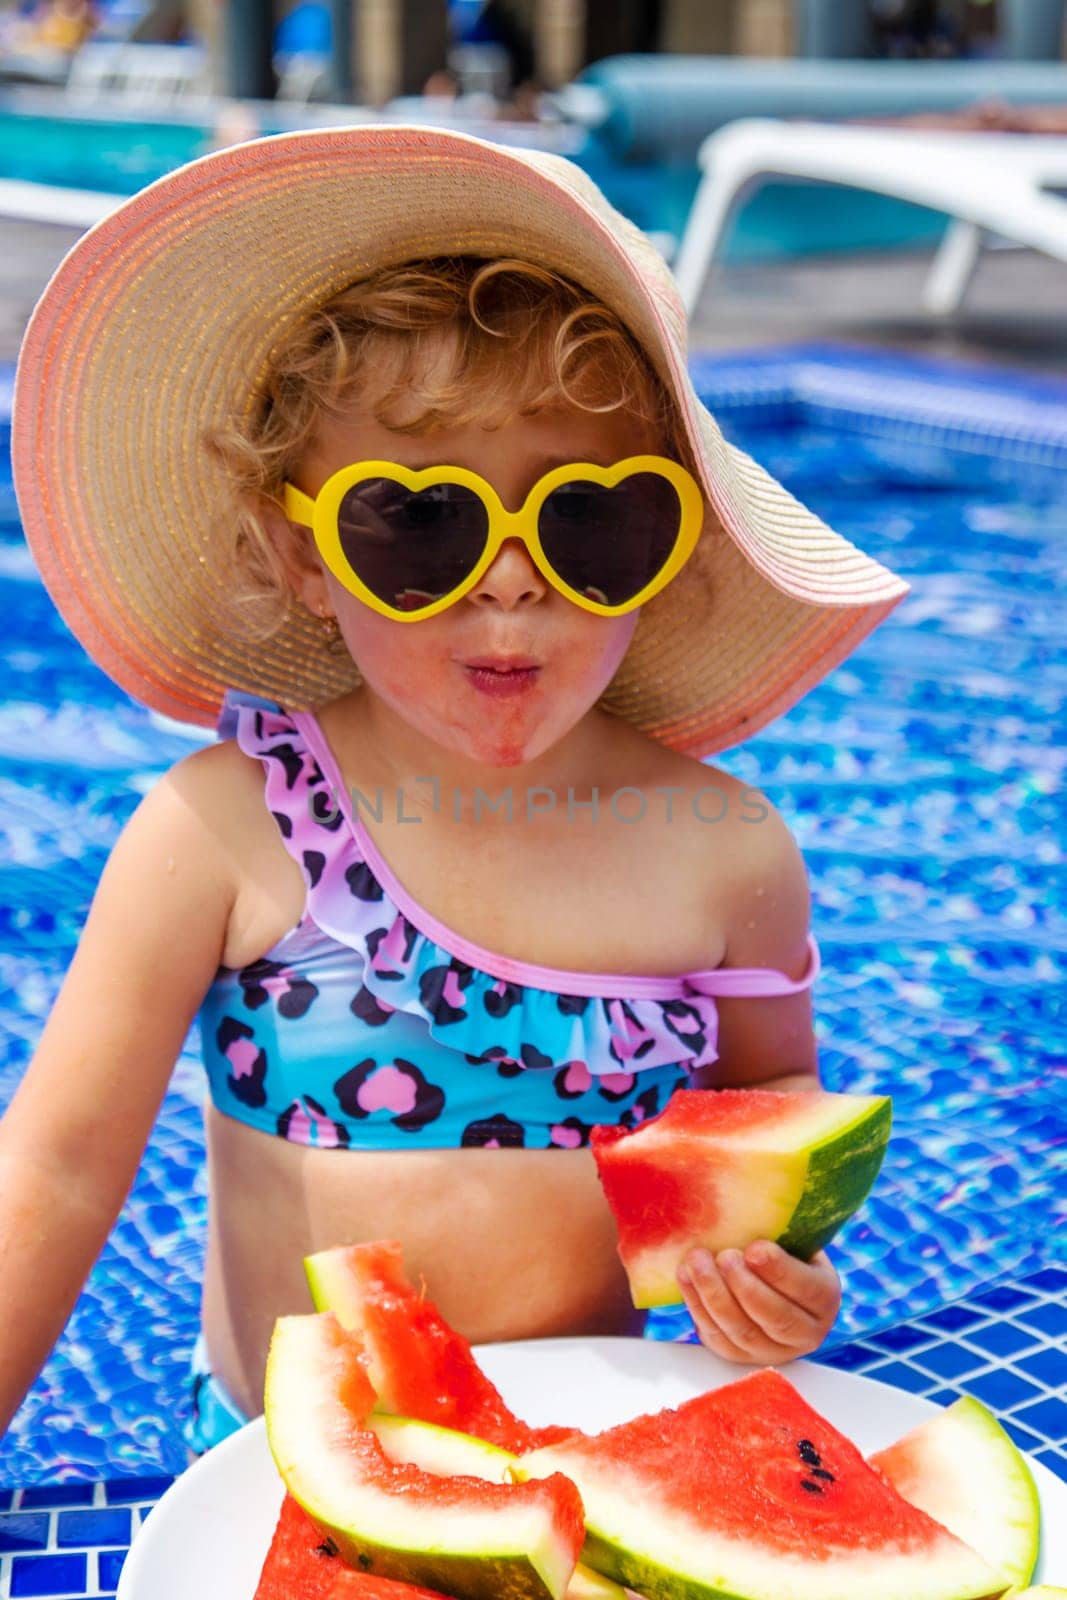 Children eat watermelon near the pool. Selective focus. by yanadjana